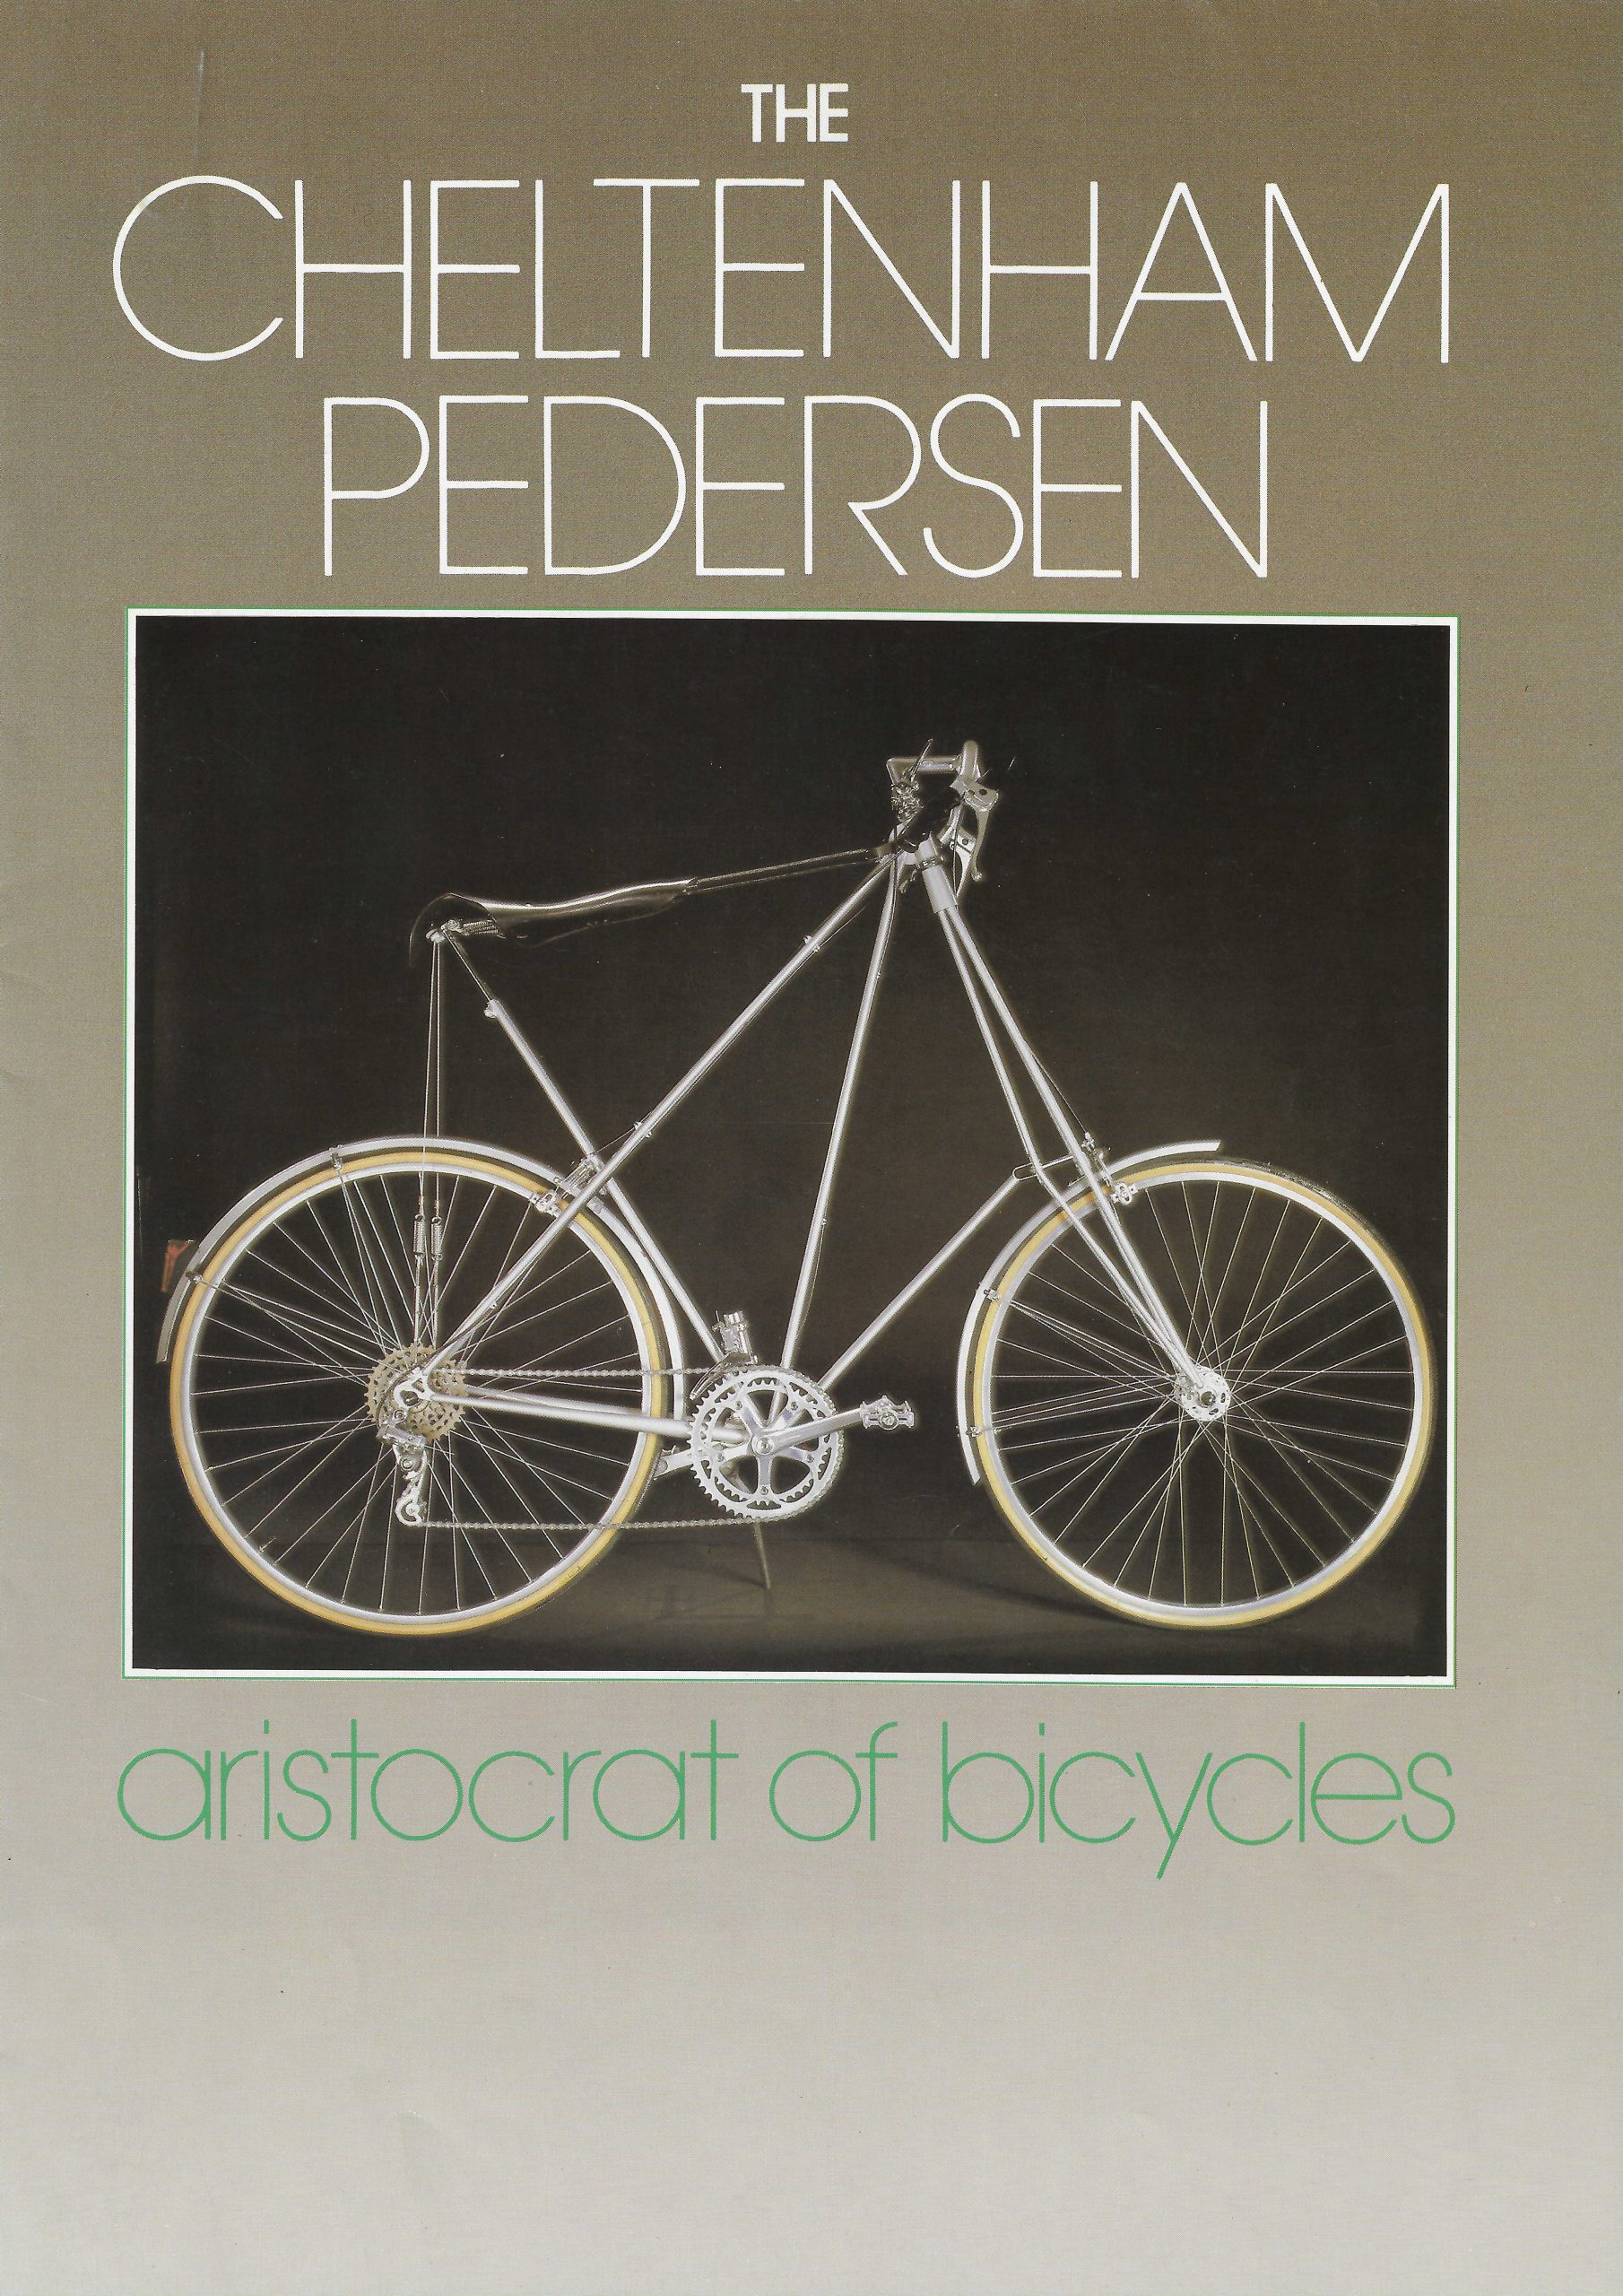 Transdisciplinary Design - The Cheltenham Pedersen - Aristocat of Bicycles